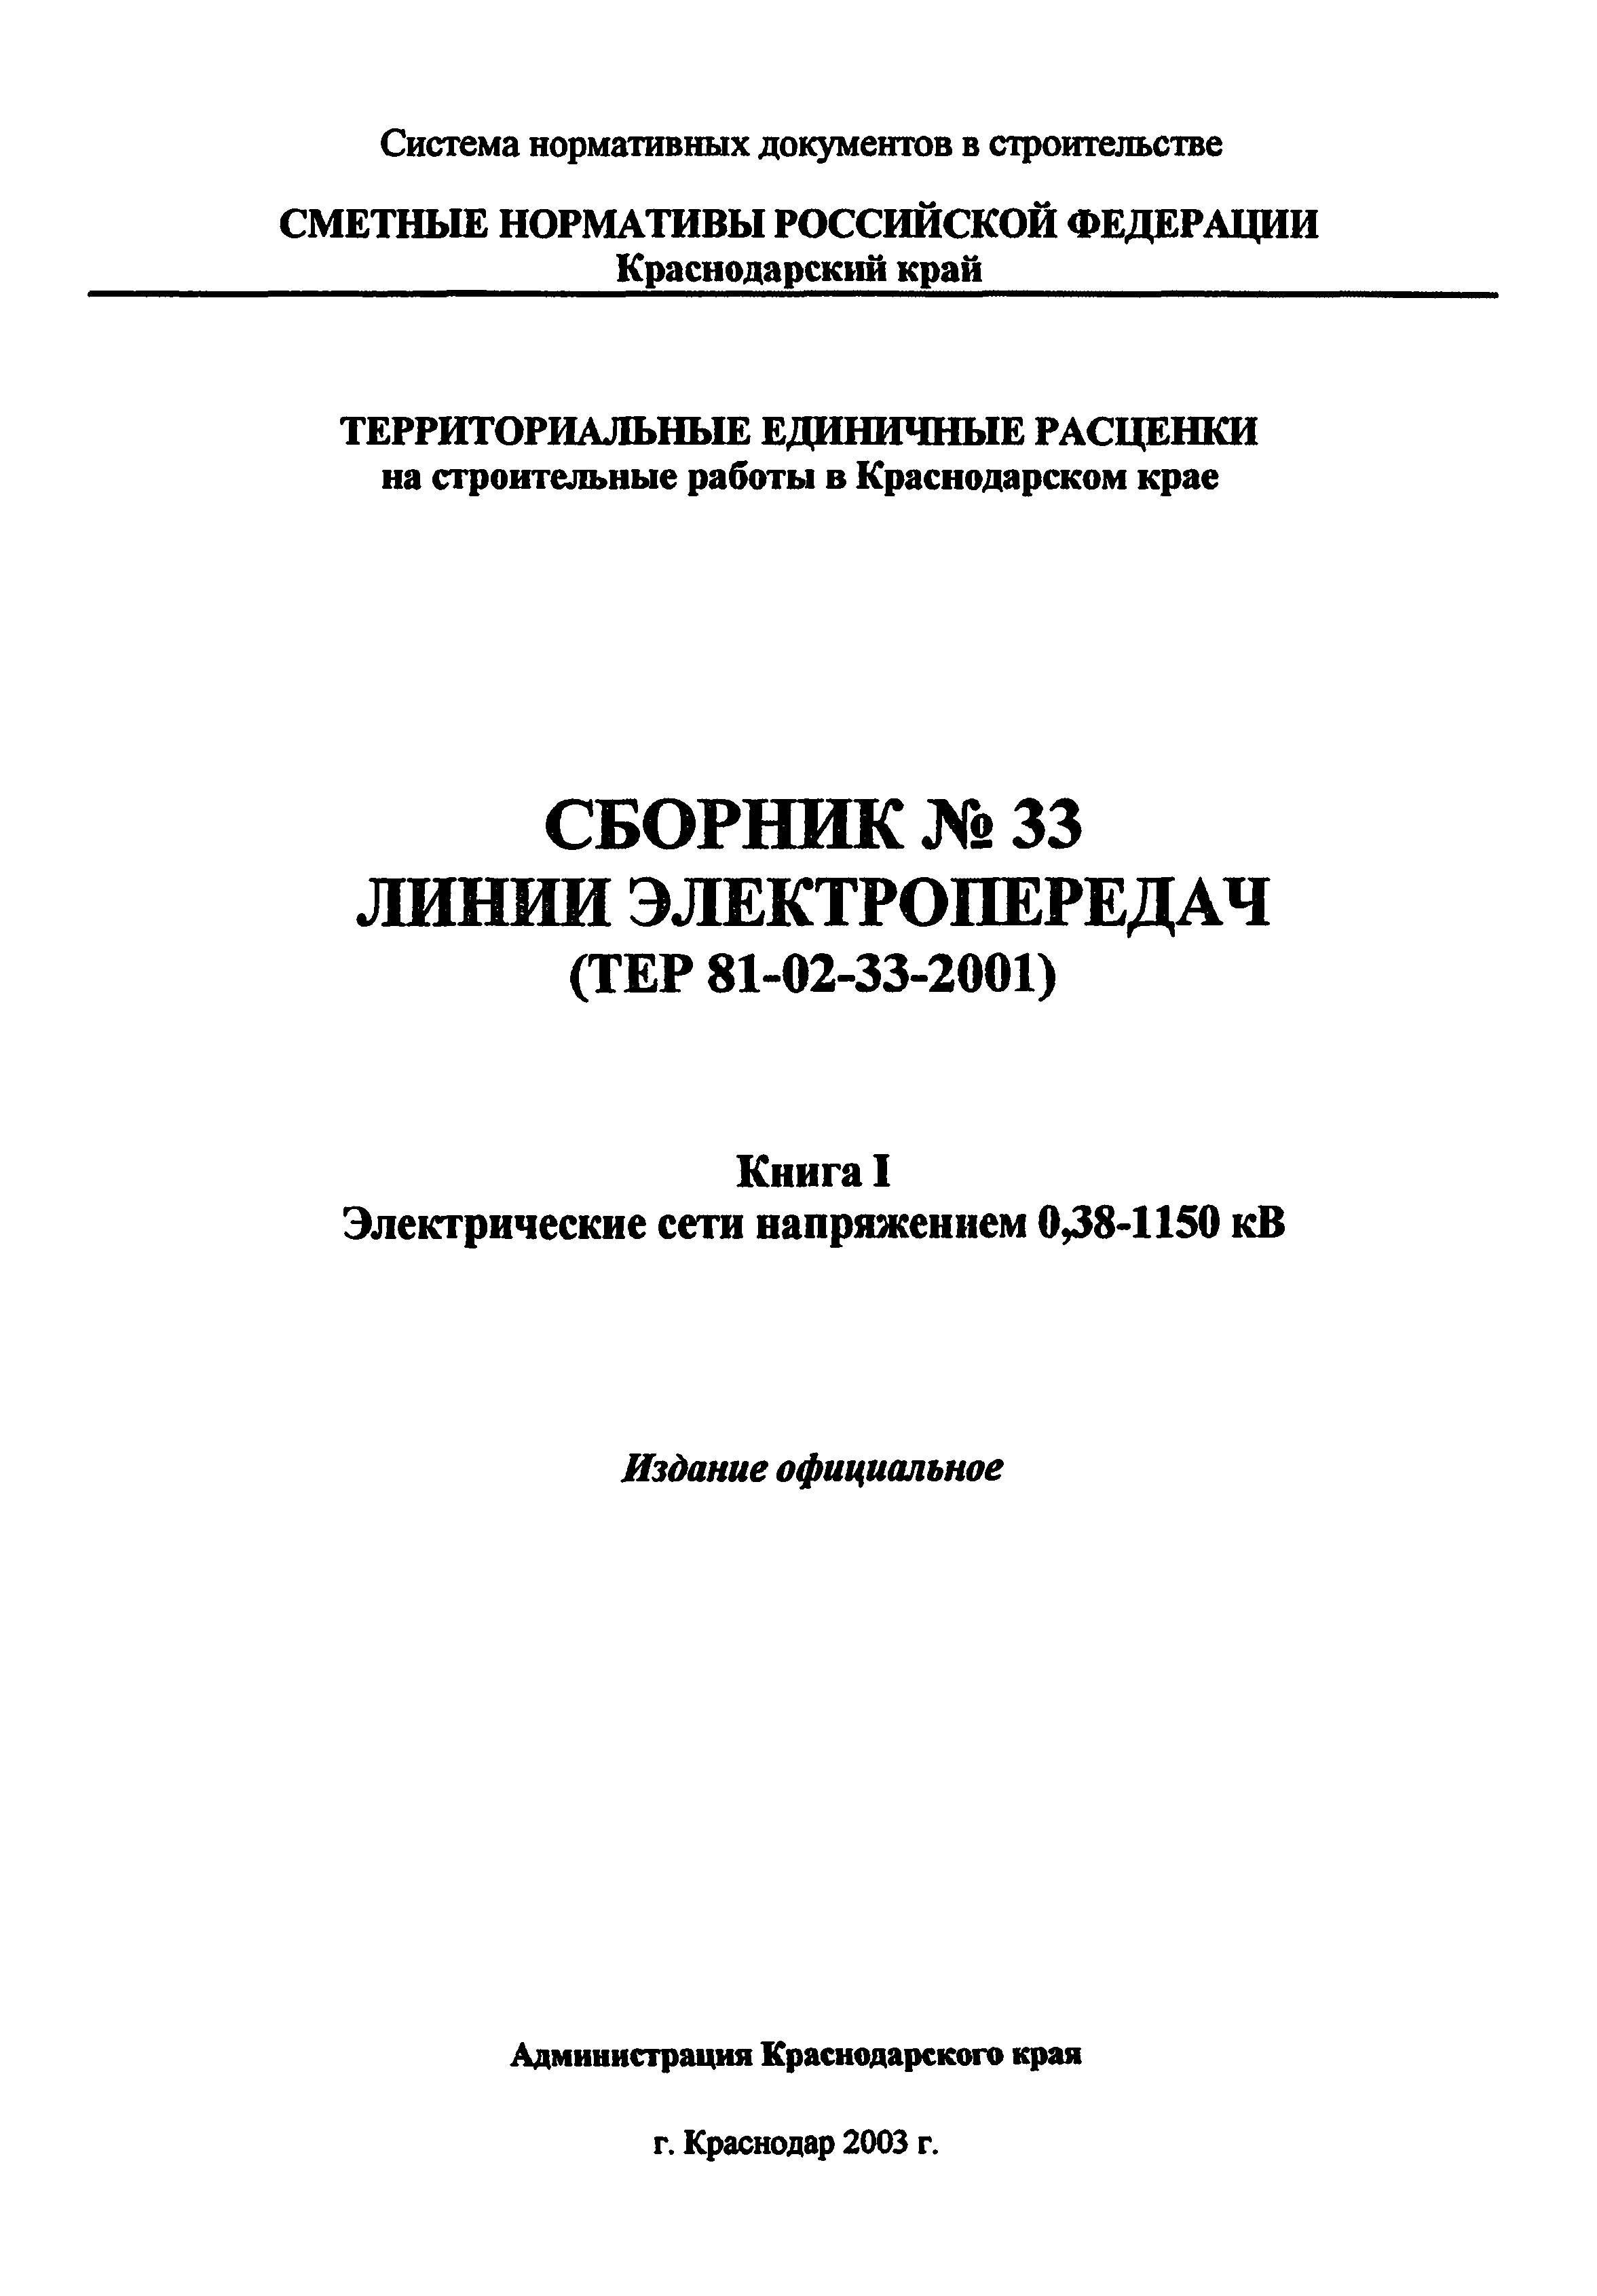 ТЕР Краснодарский край 2001-33